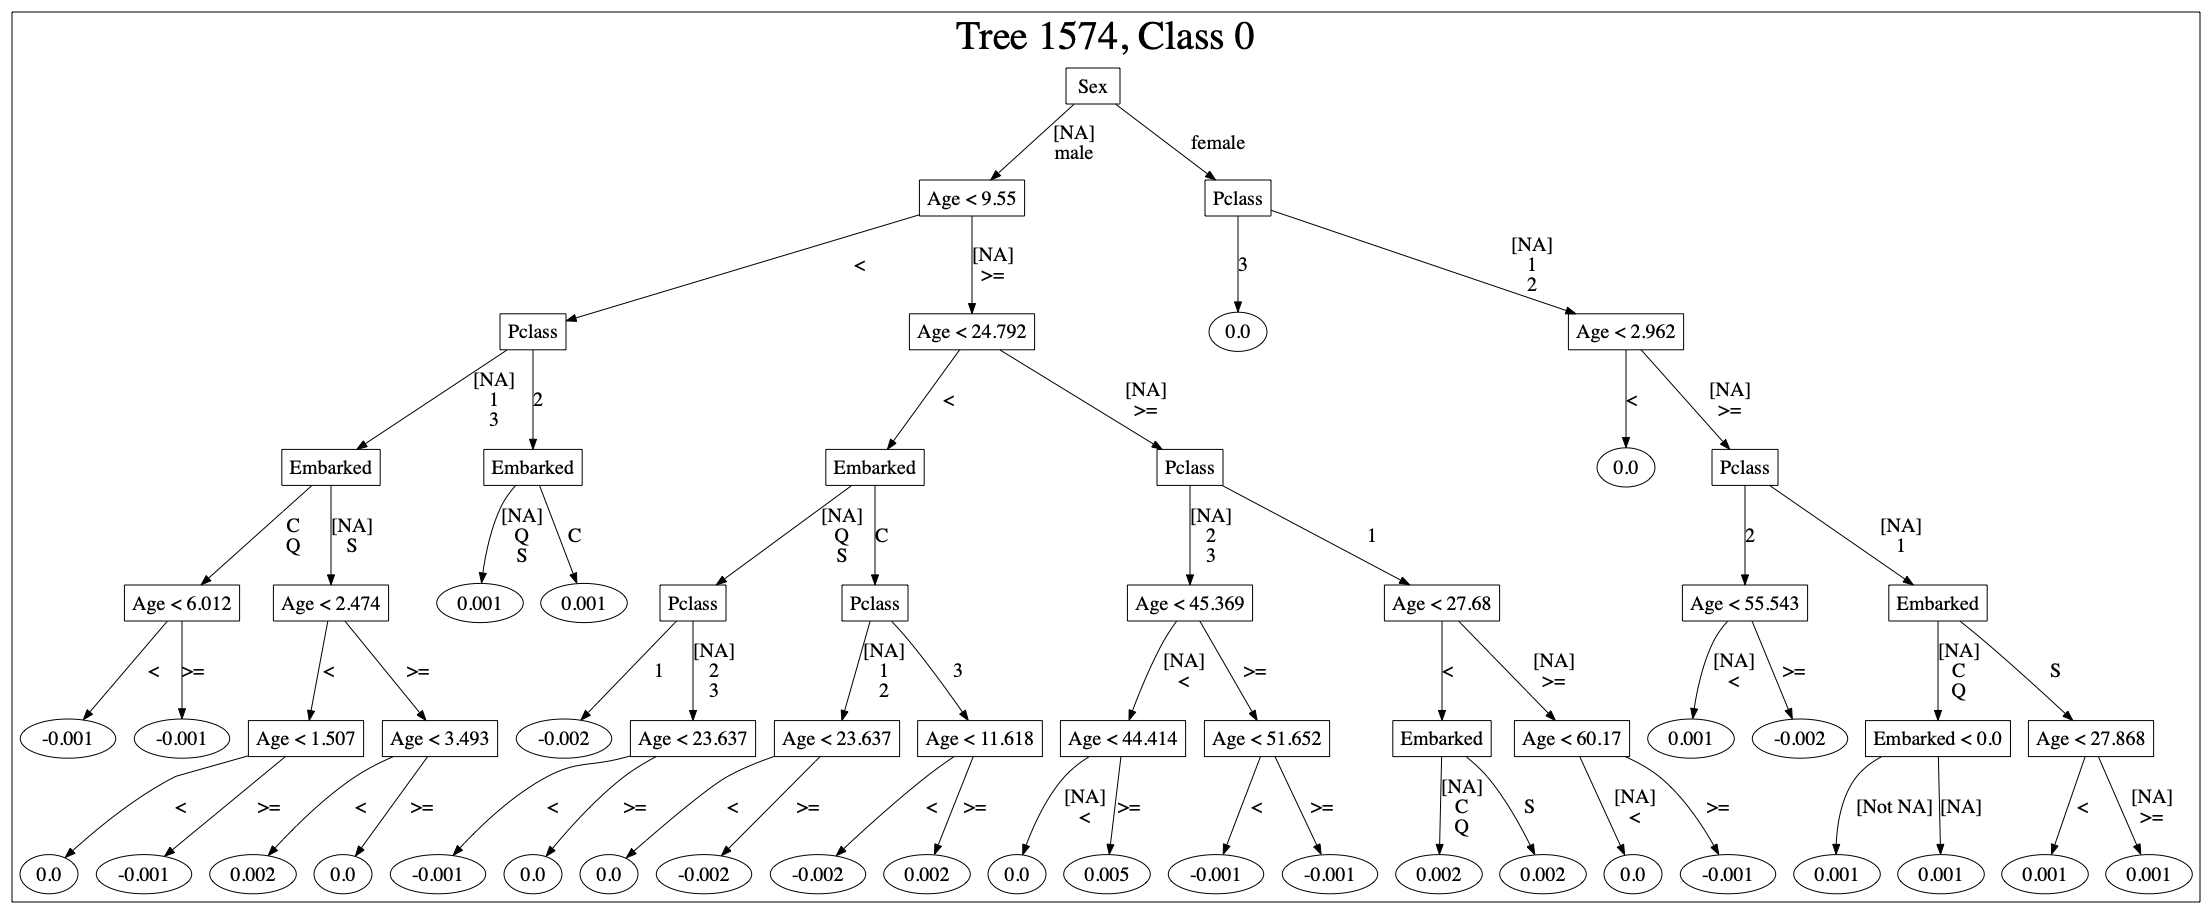 GDM Model - Tree 1574